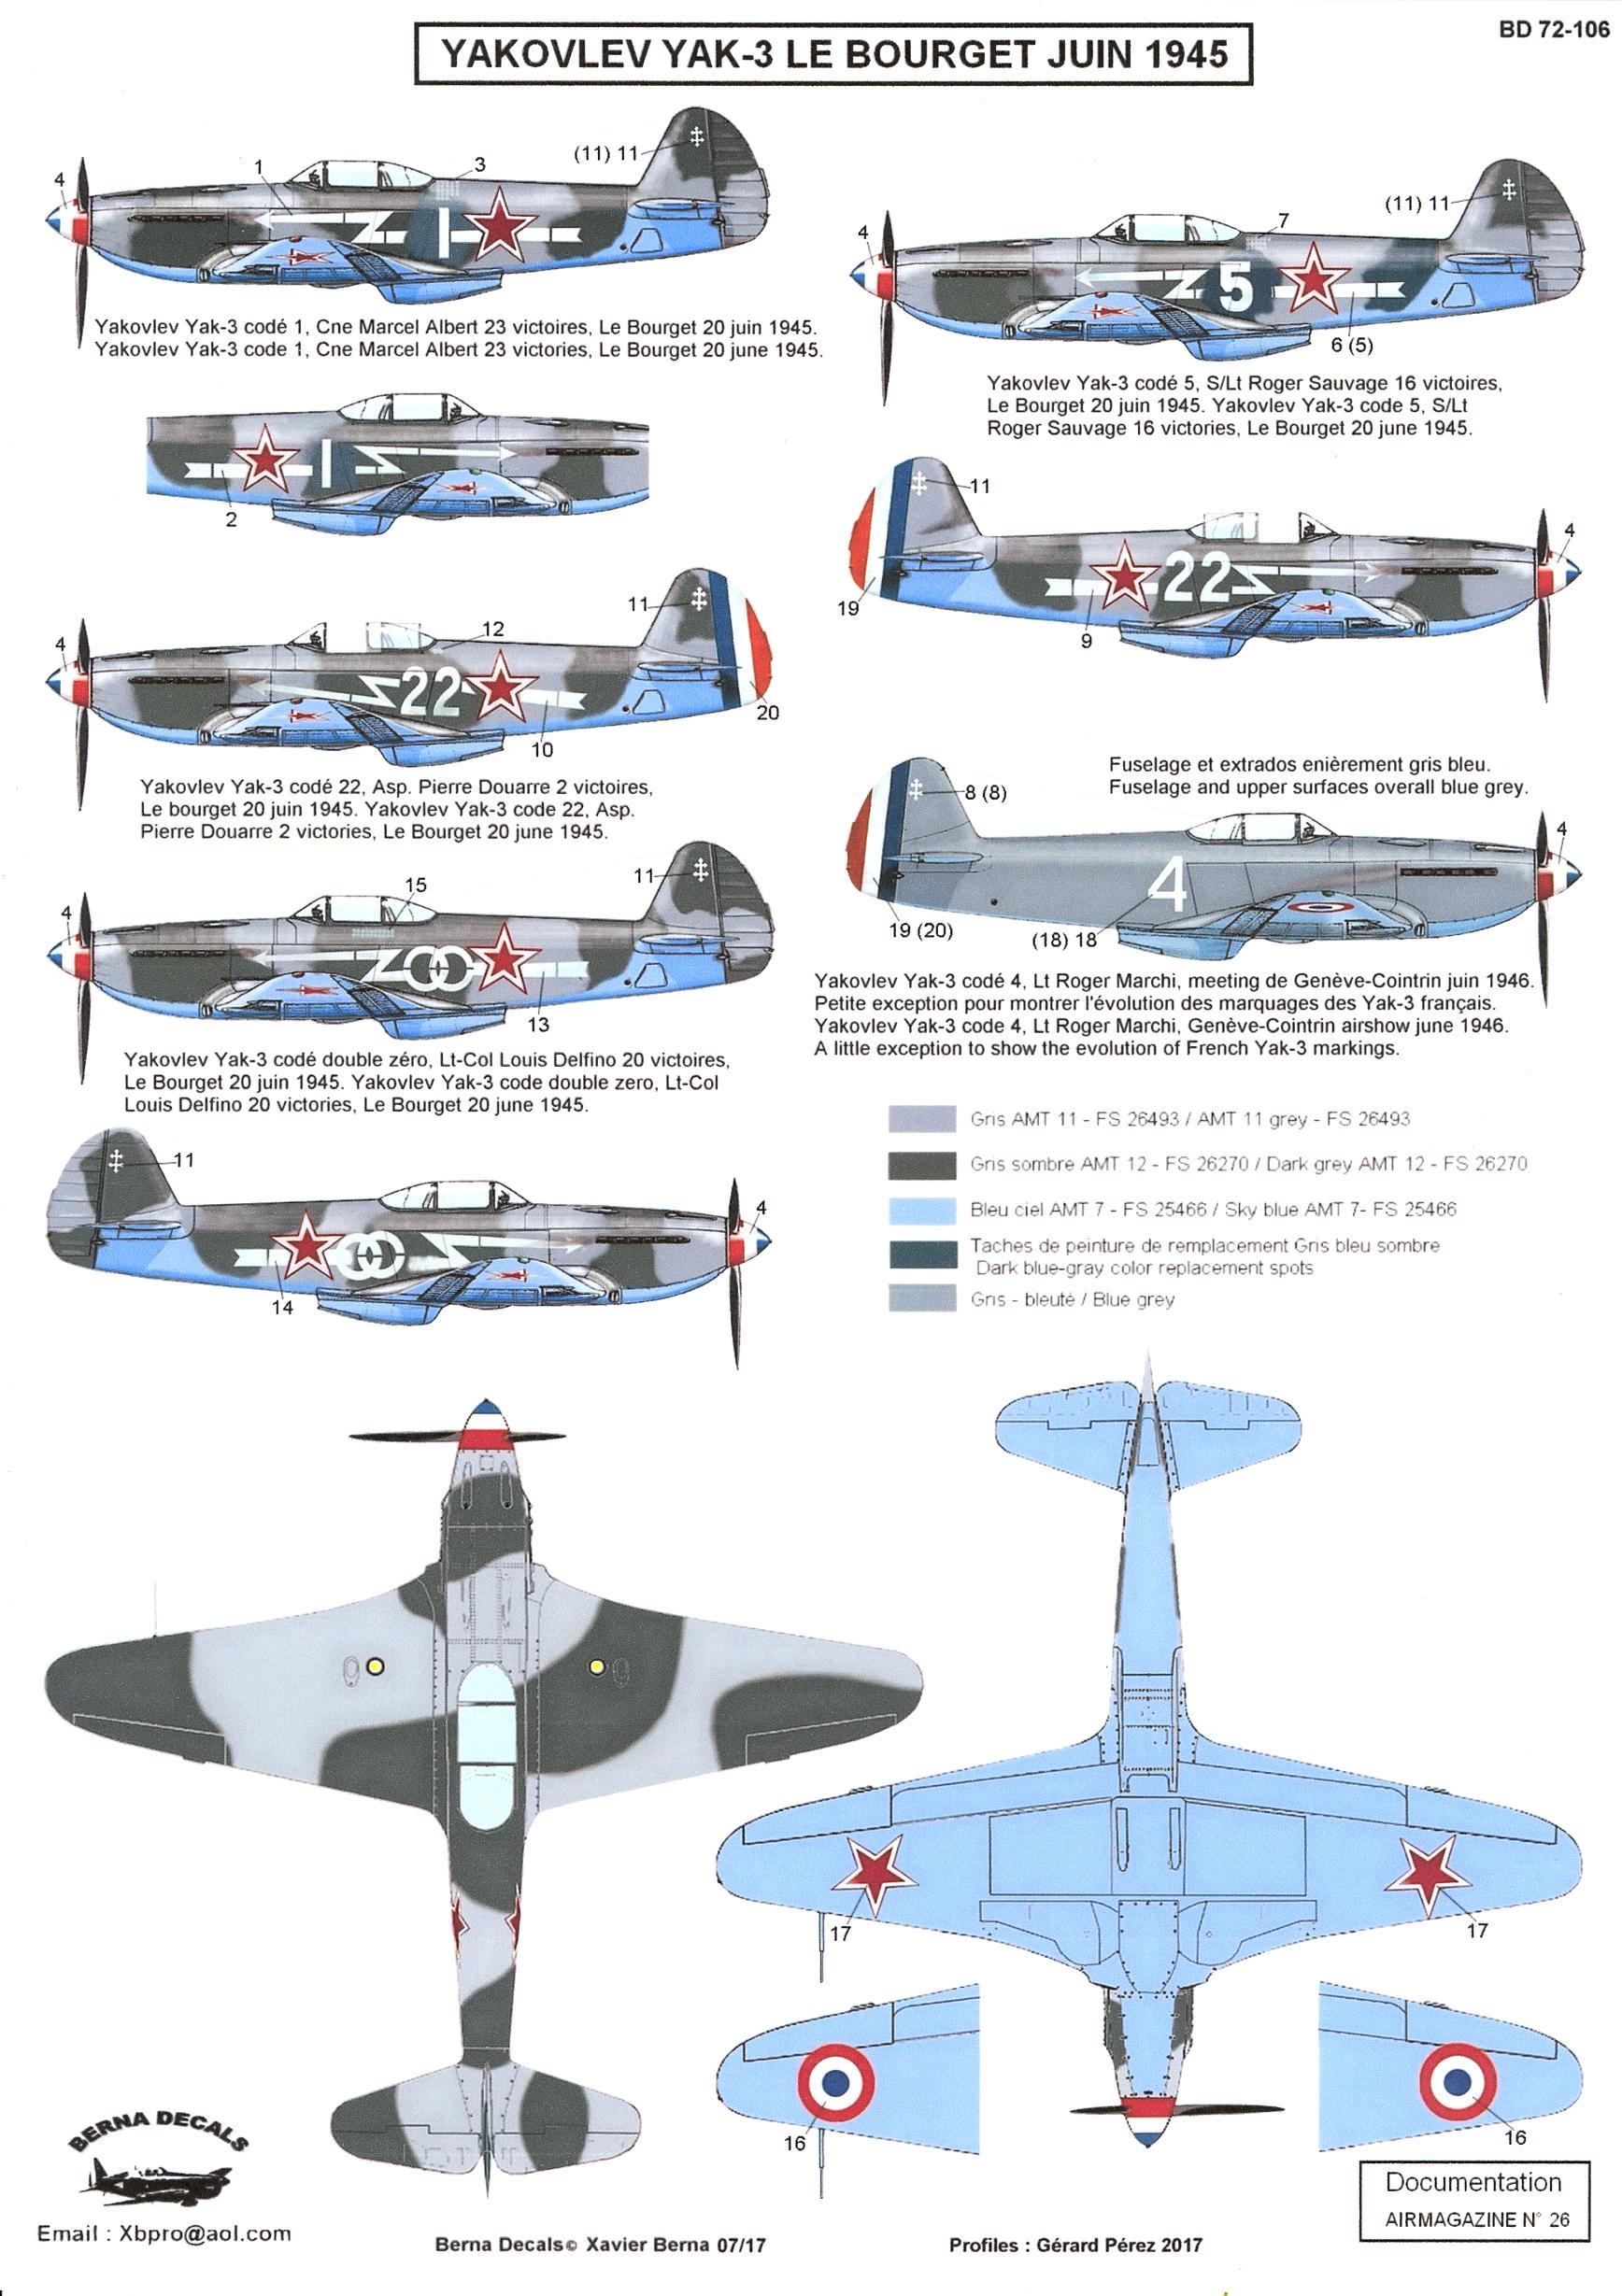 Berna Decals 1/32 YAKOVLEV Yak-3 Le Bourget June 1945